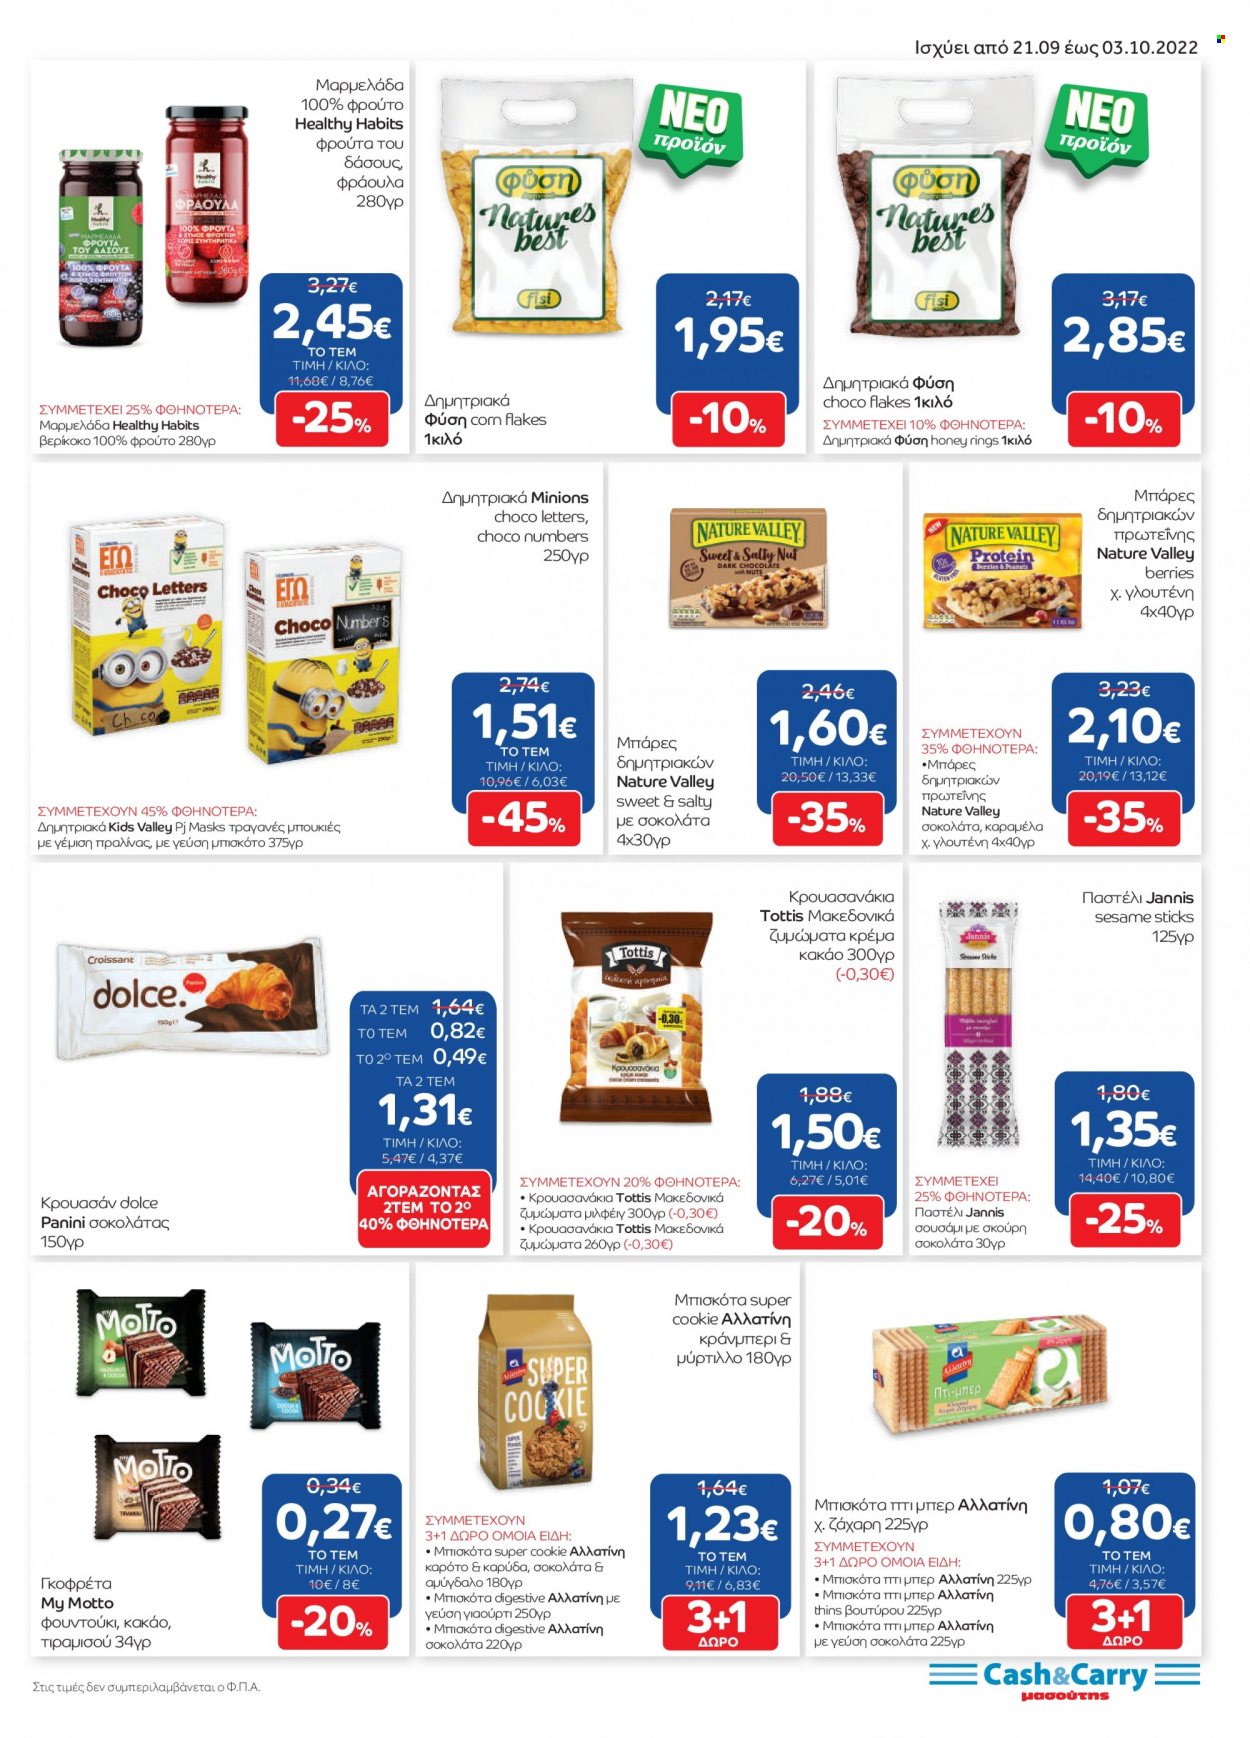 thumbnail - Φυλλάδια Masoutis Cash & Carry - 21.09.2022 - 03.10.2022 - Εκπτωτικά προϊόντα - μπισκότα, panini, γιαούρτι, ζάχαρη, μαρμελάδα, αμύγδαλα. Σελίδα 11.